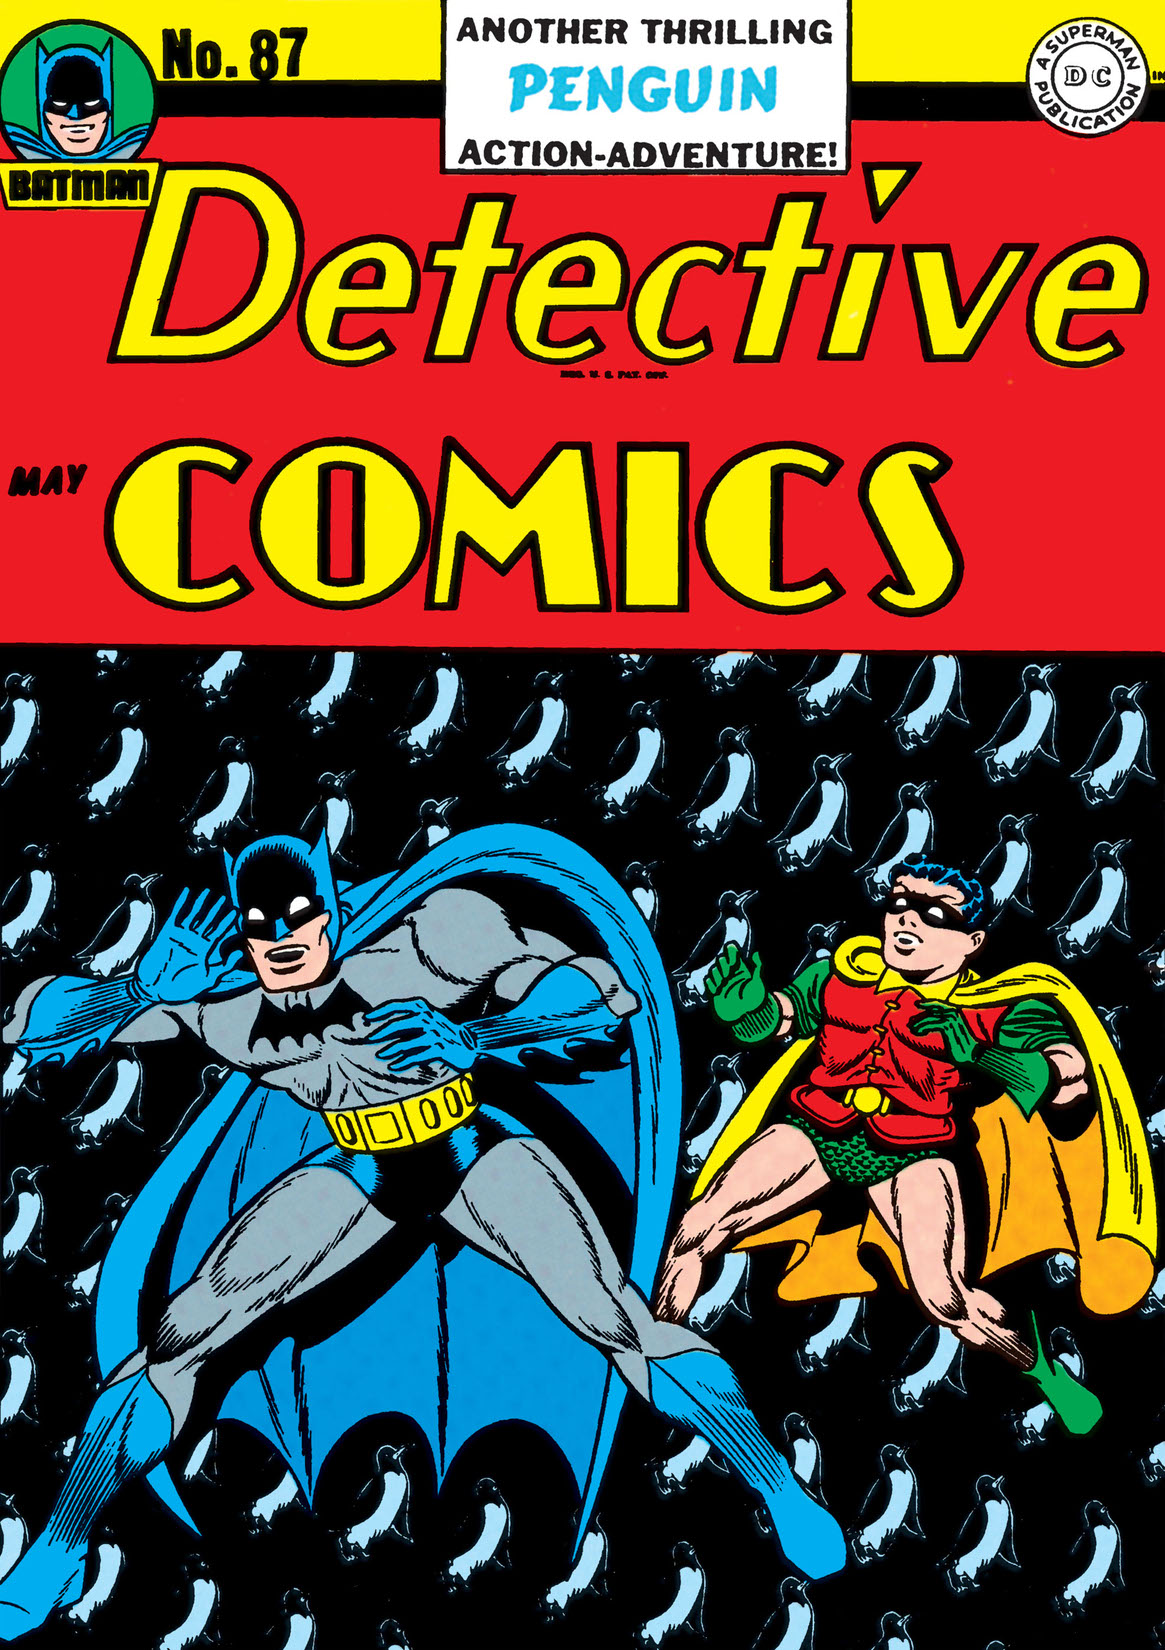 Detective Comics (1937-) #87 preview images